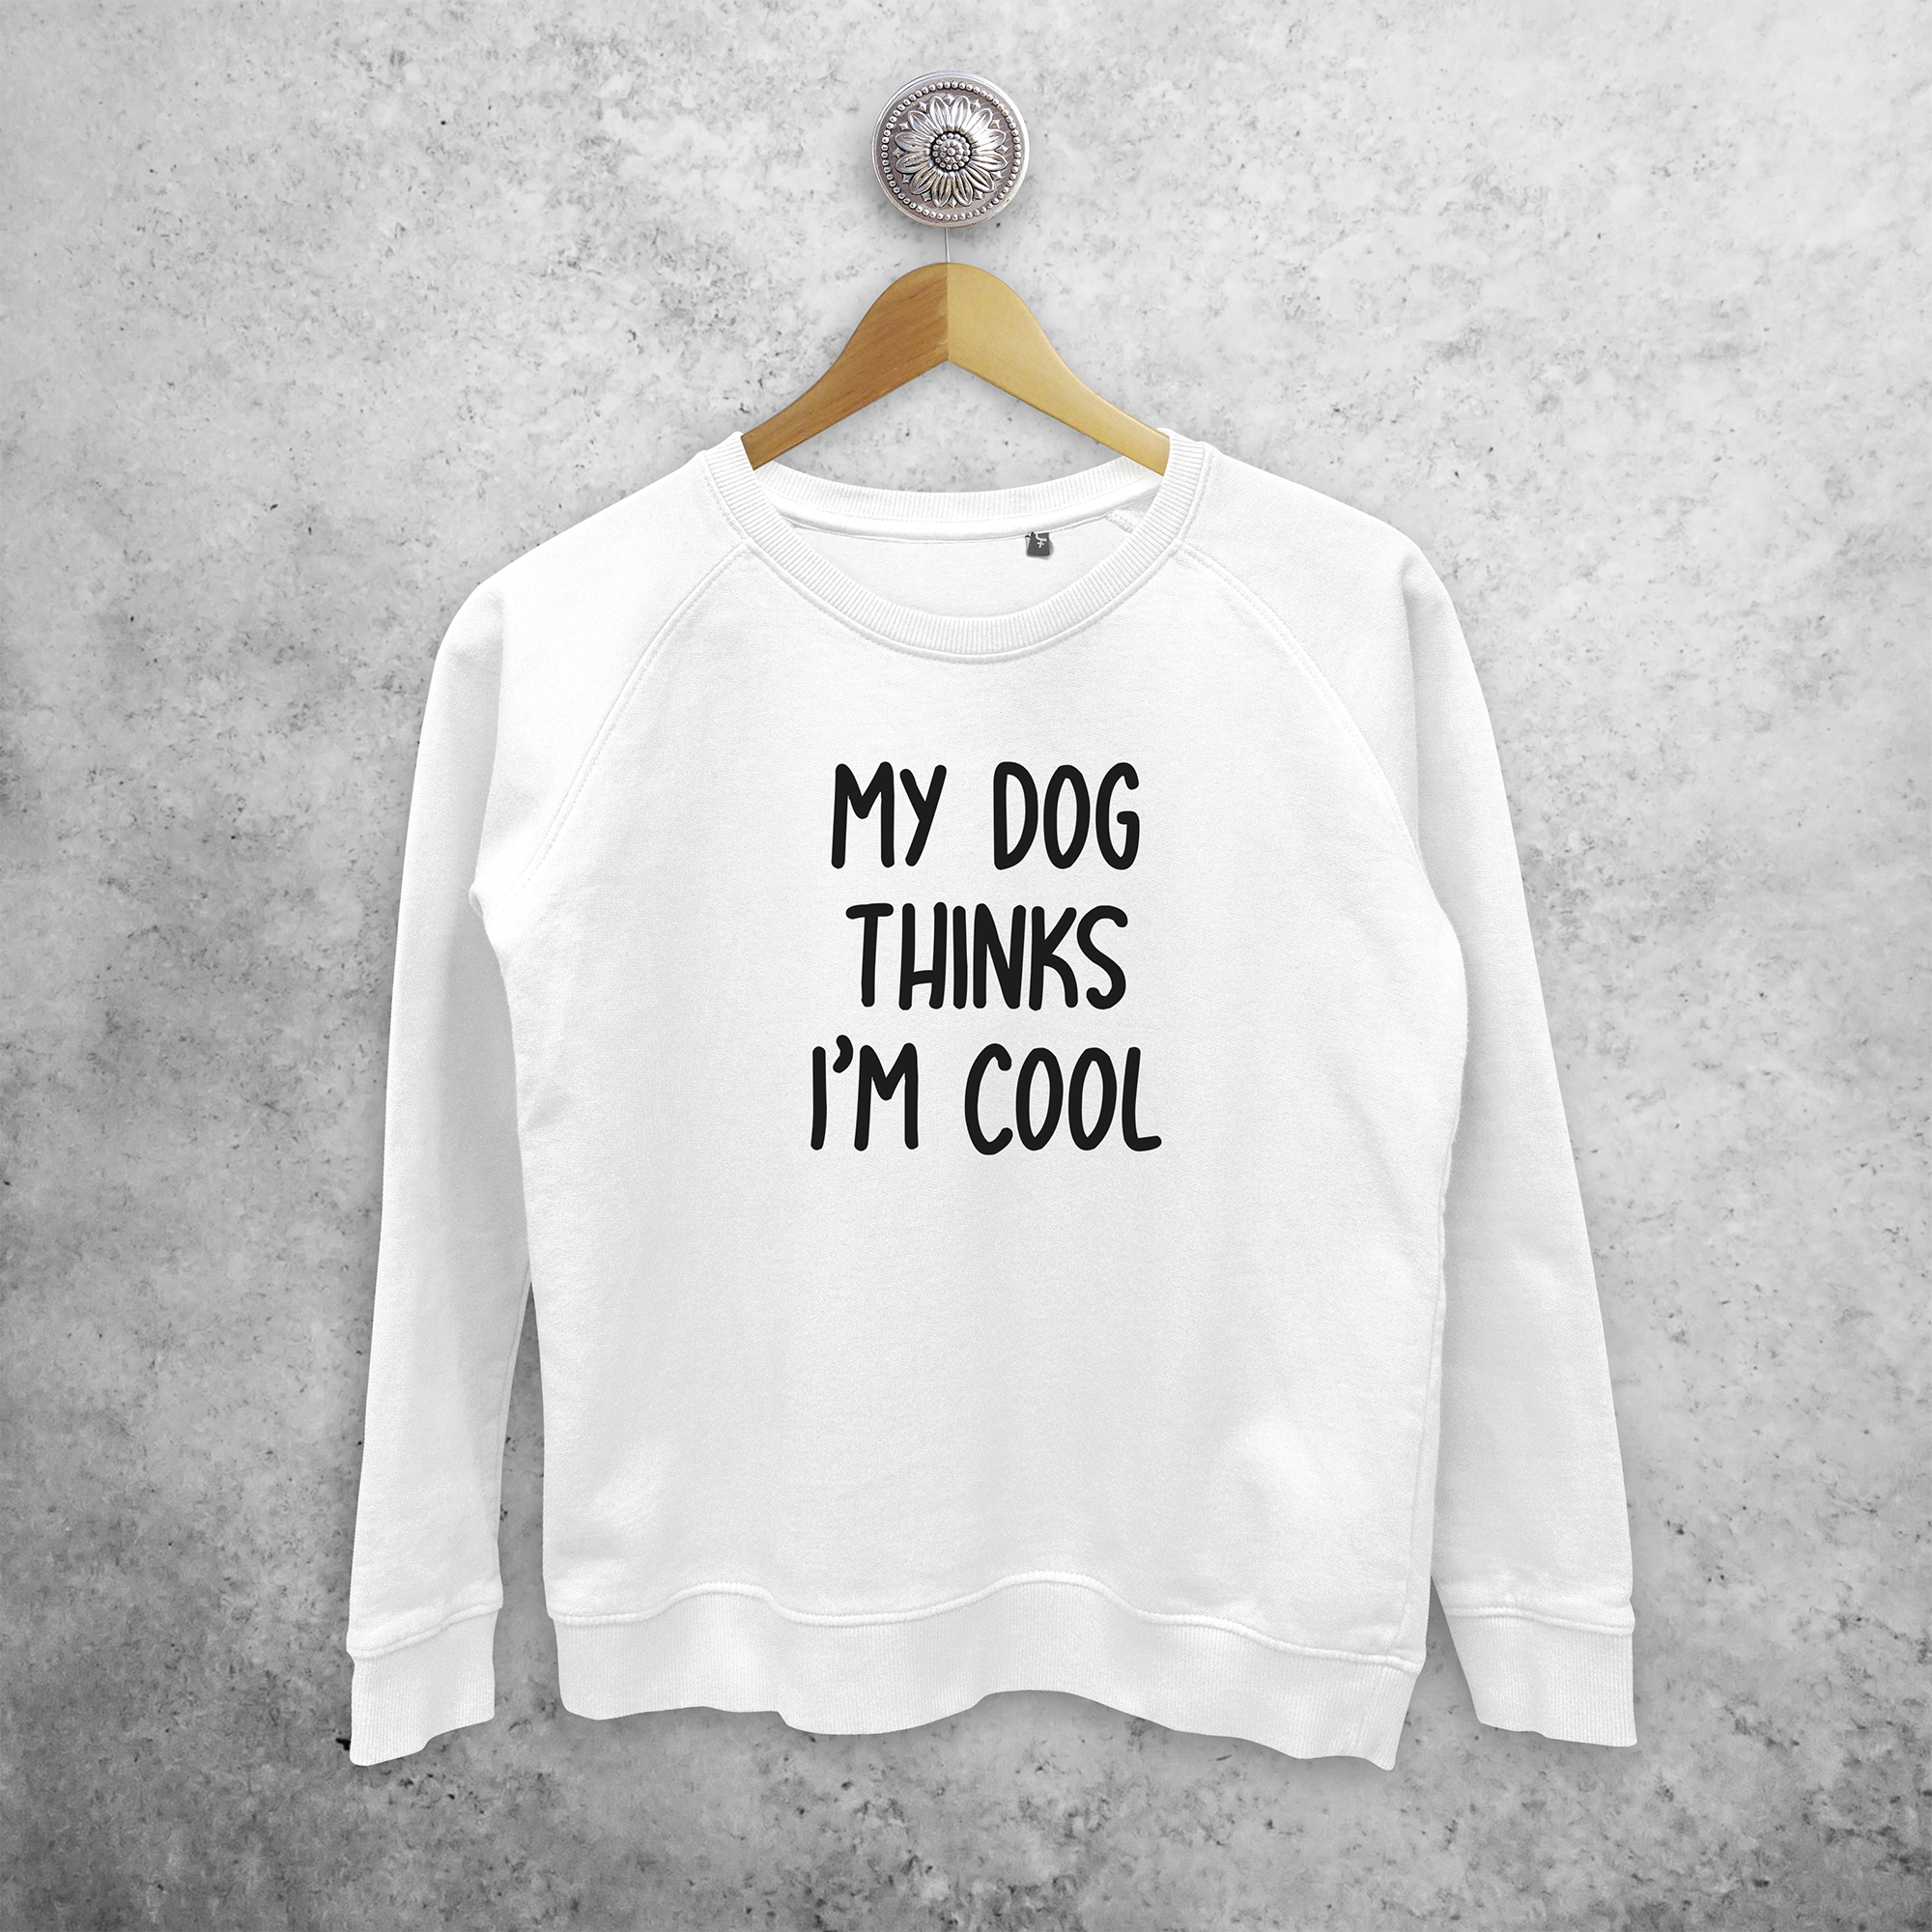 'My dog thinks I'm cool' sweater